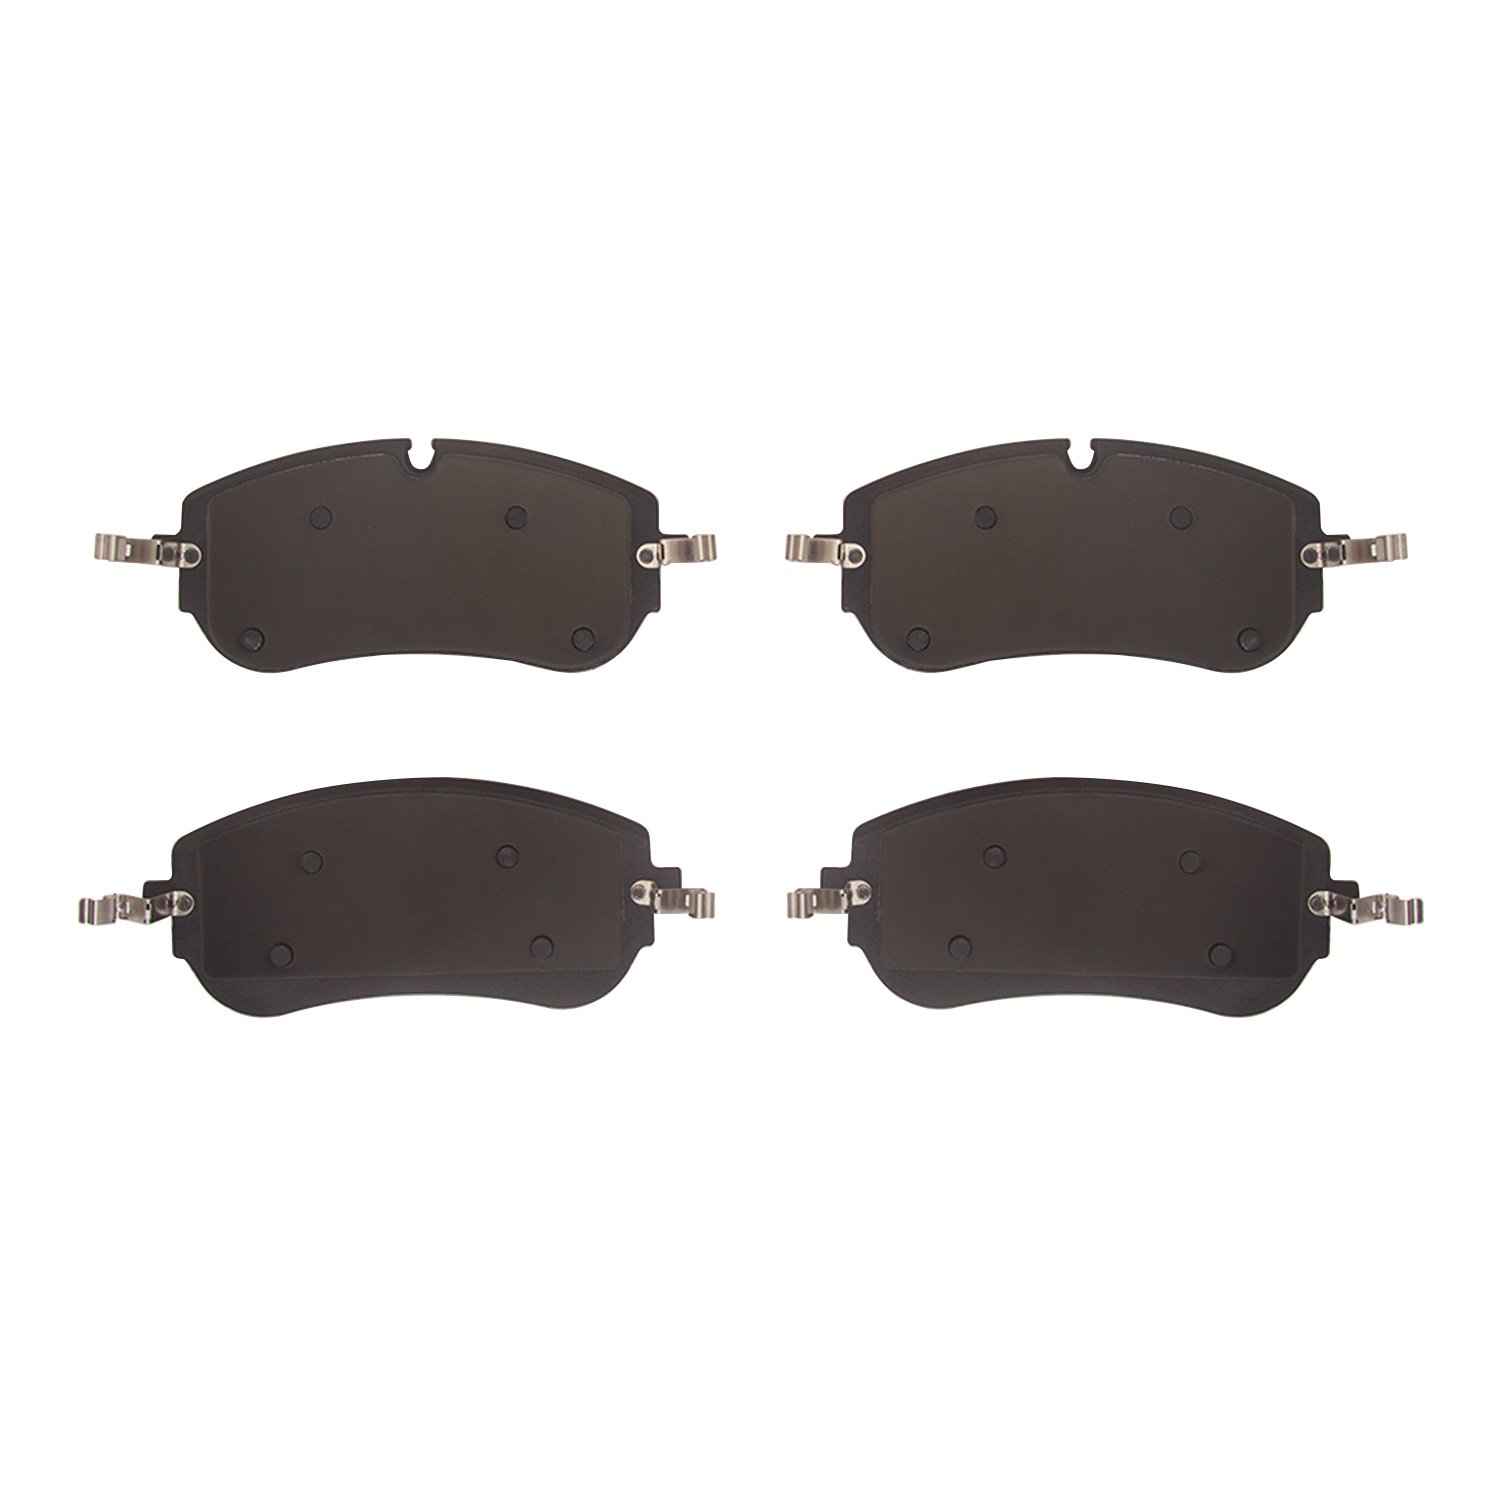 1600-2416-00 5000 Euro Ceramic Brake Pads, Fits Select Multiple Makes/Models, Position: Front